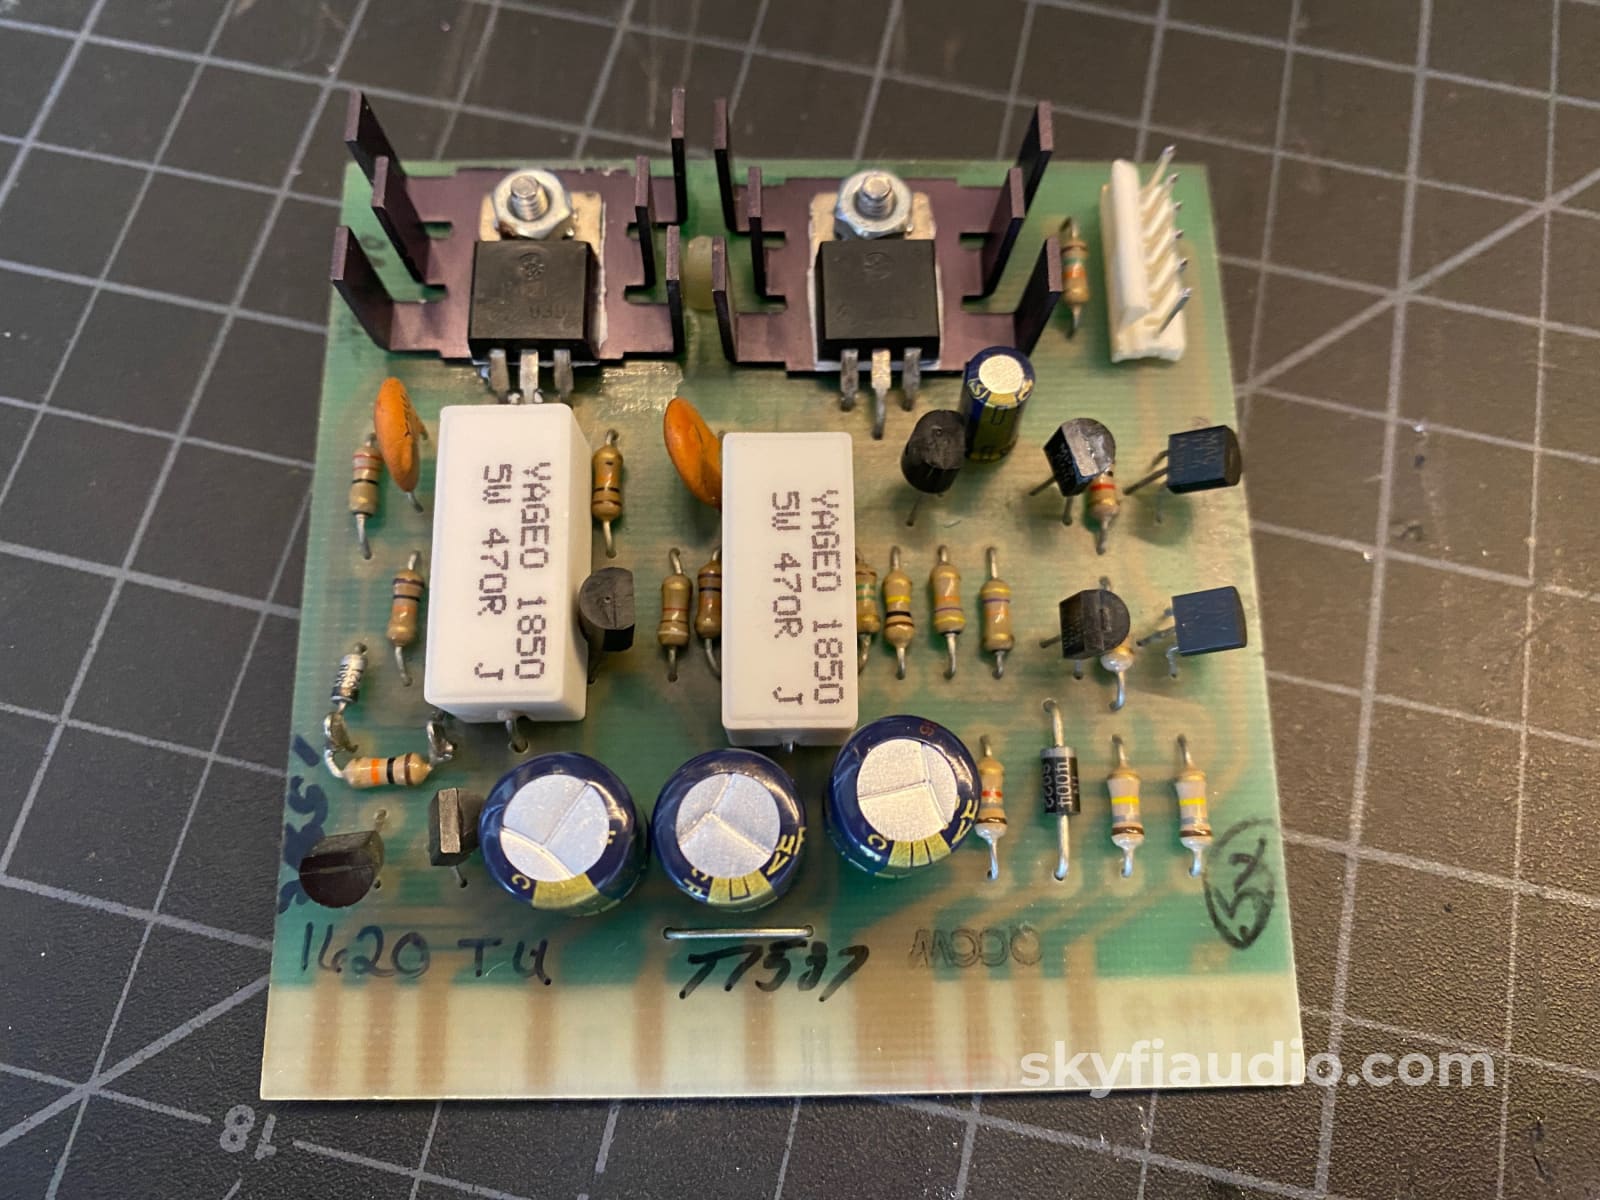 Mcintosh Mc7270 Blue Monster Amplifier Electronically Restored 270W X 2